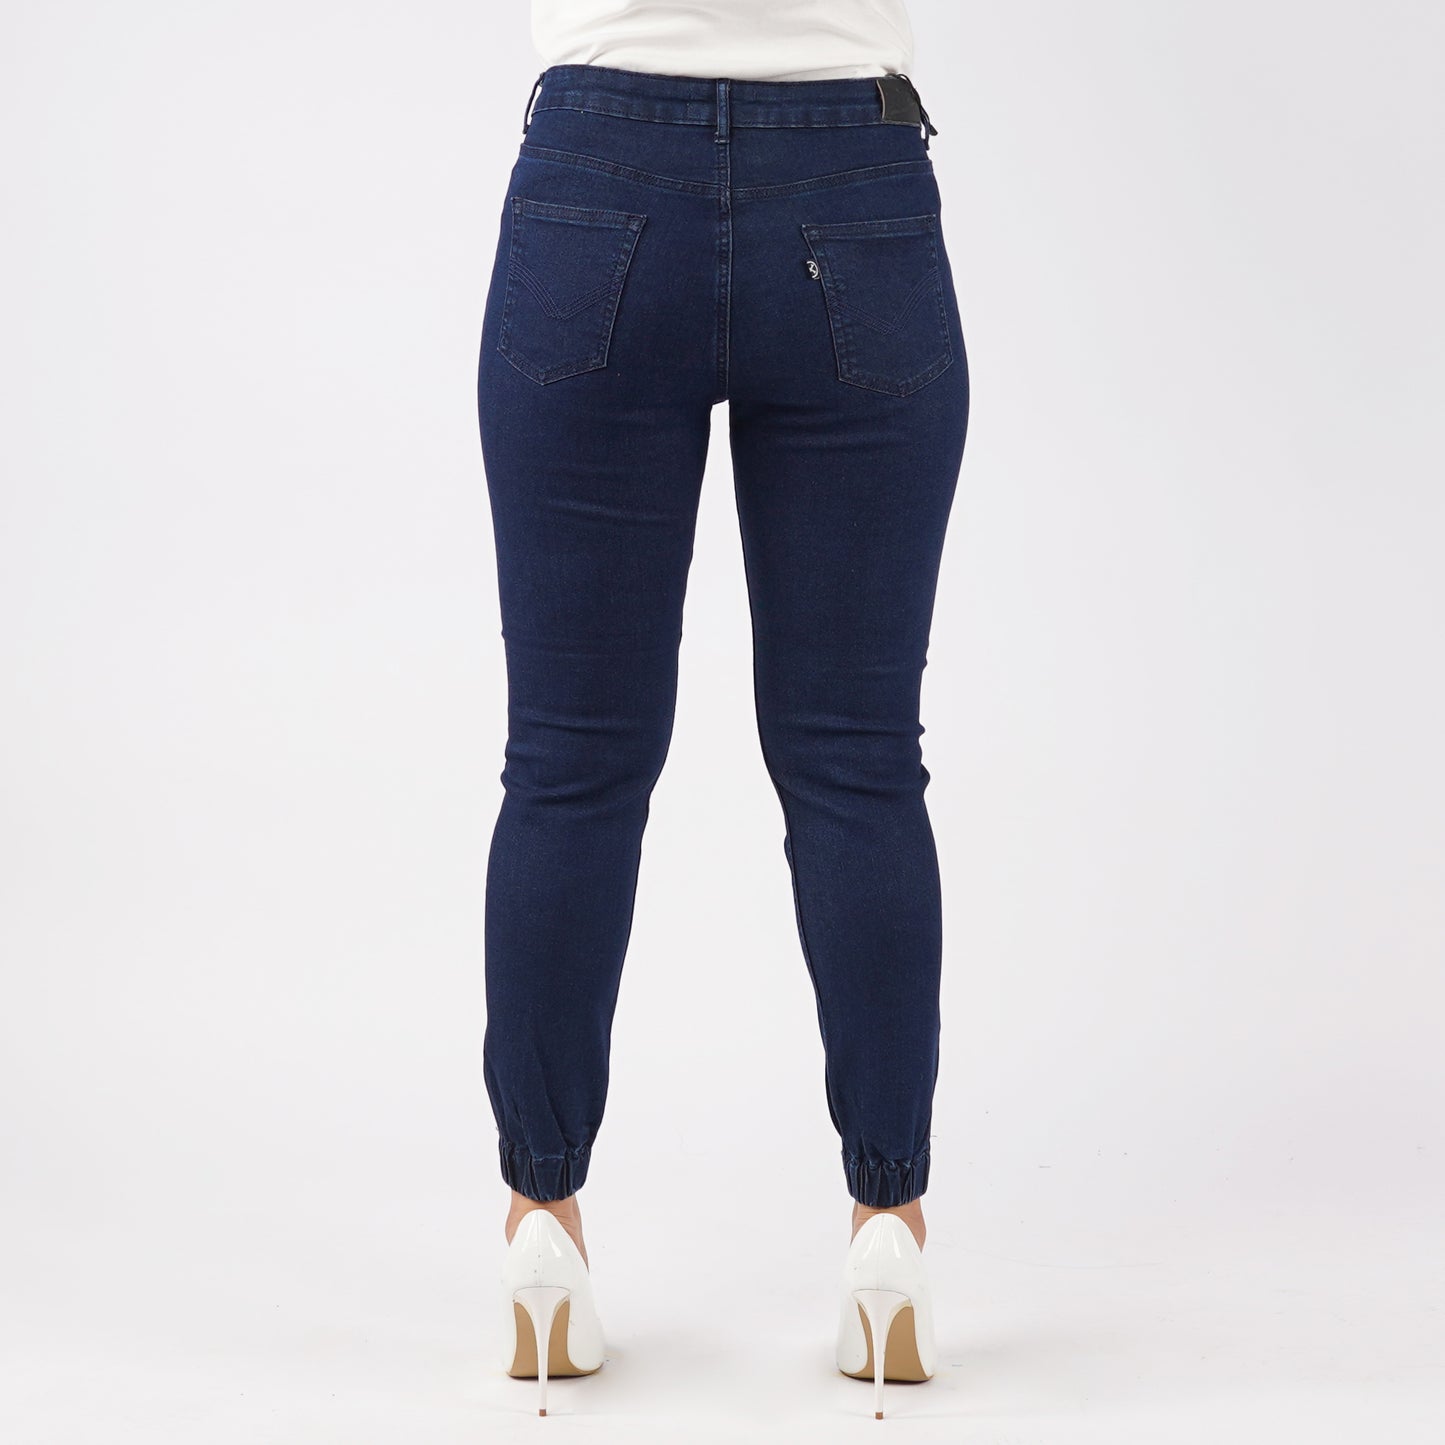 Petrol Ladies Basic Denim Boyfriend Jeans for Women Trendy Fashion High Quality Apparel Comfortable Casual Pants for Women Mid waist 149417 (Dark Shade)